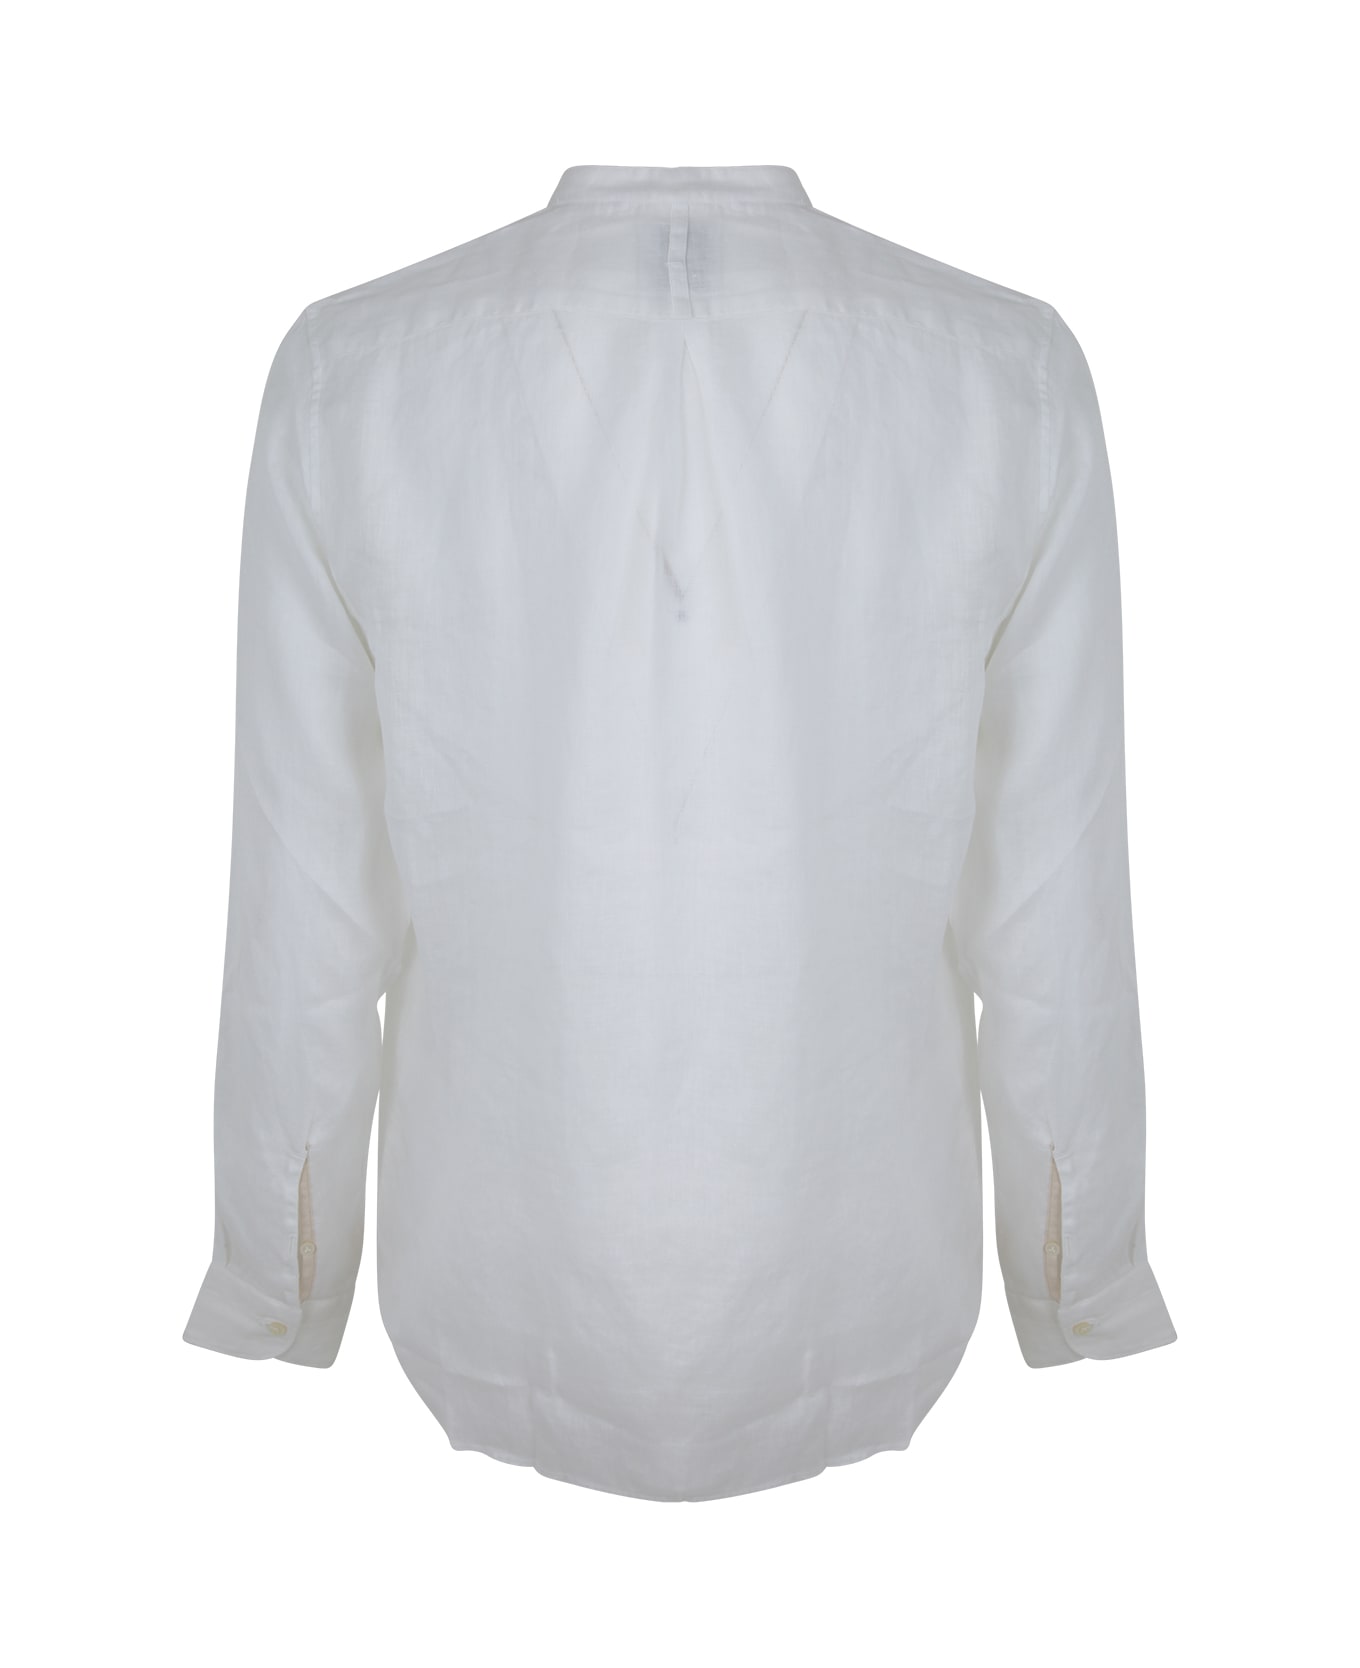 DNL Korean Neck Shirt - White シャツ